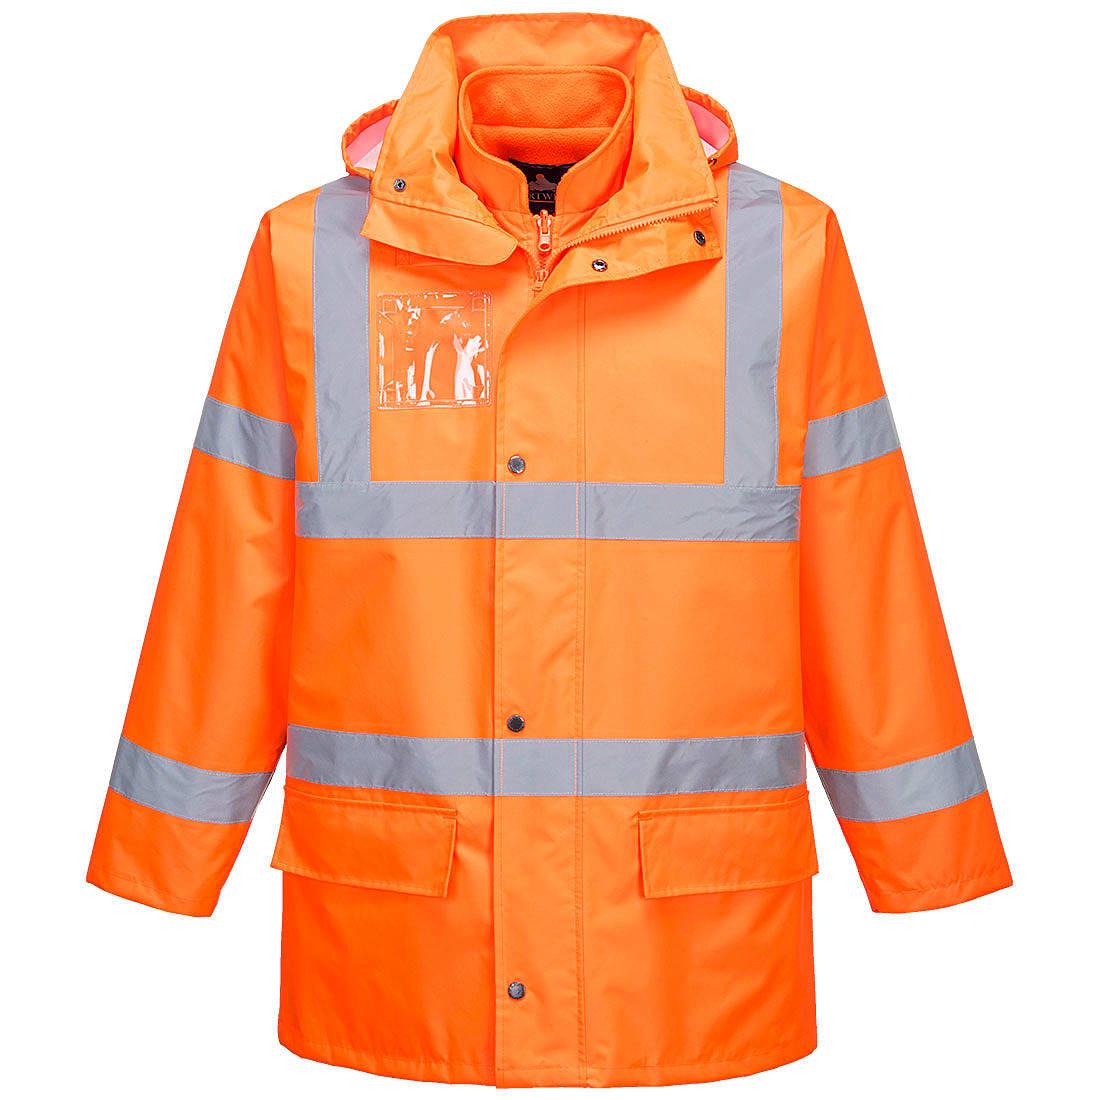 Portwest Hi-Viz Essential 5-in-1 Jacket in Orange (Product Code: S765)